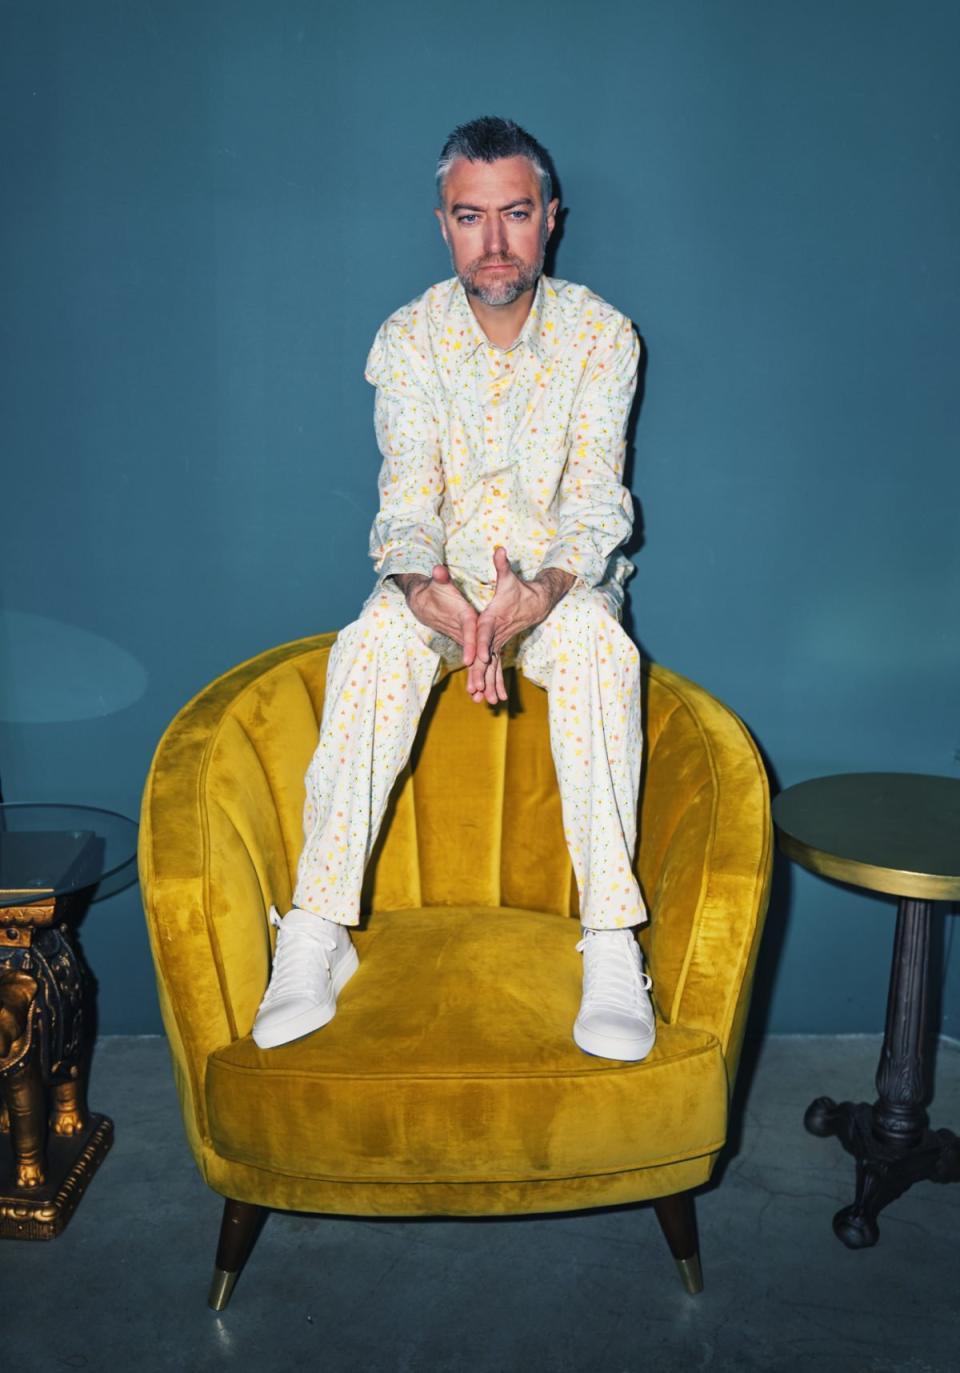 Portrait of Sean Gunn in a white suit on a yellow chair against a blue wall